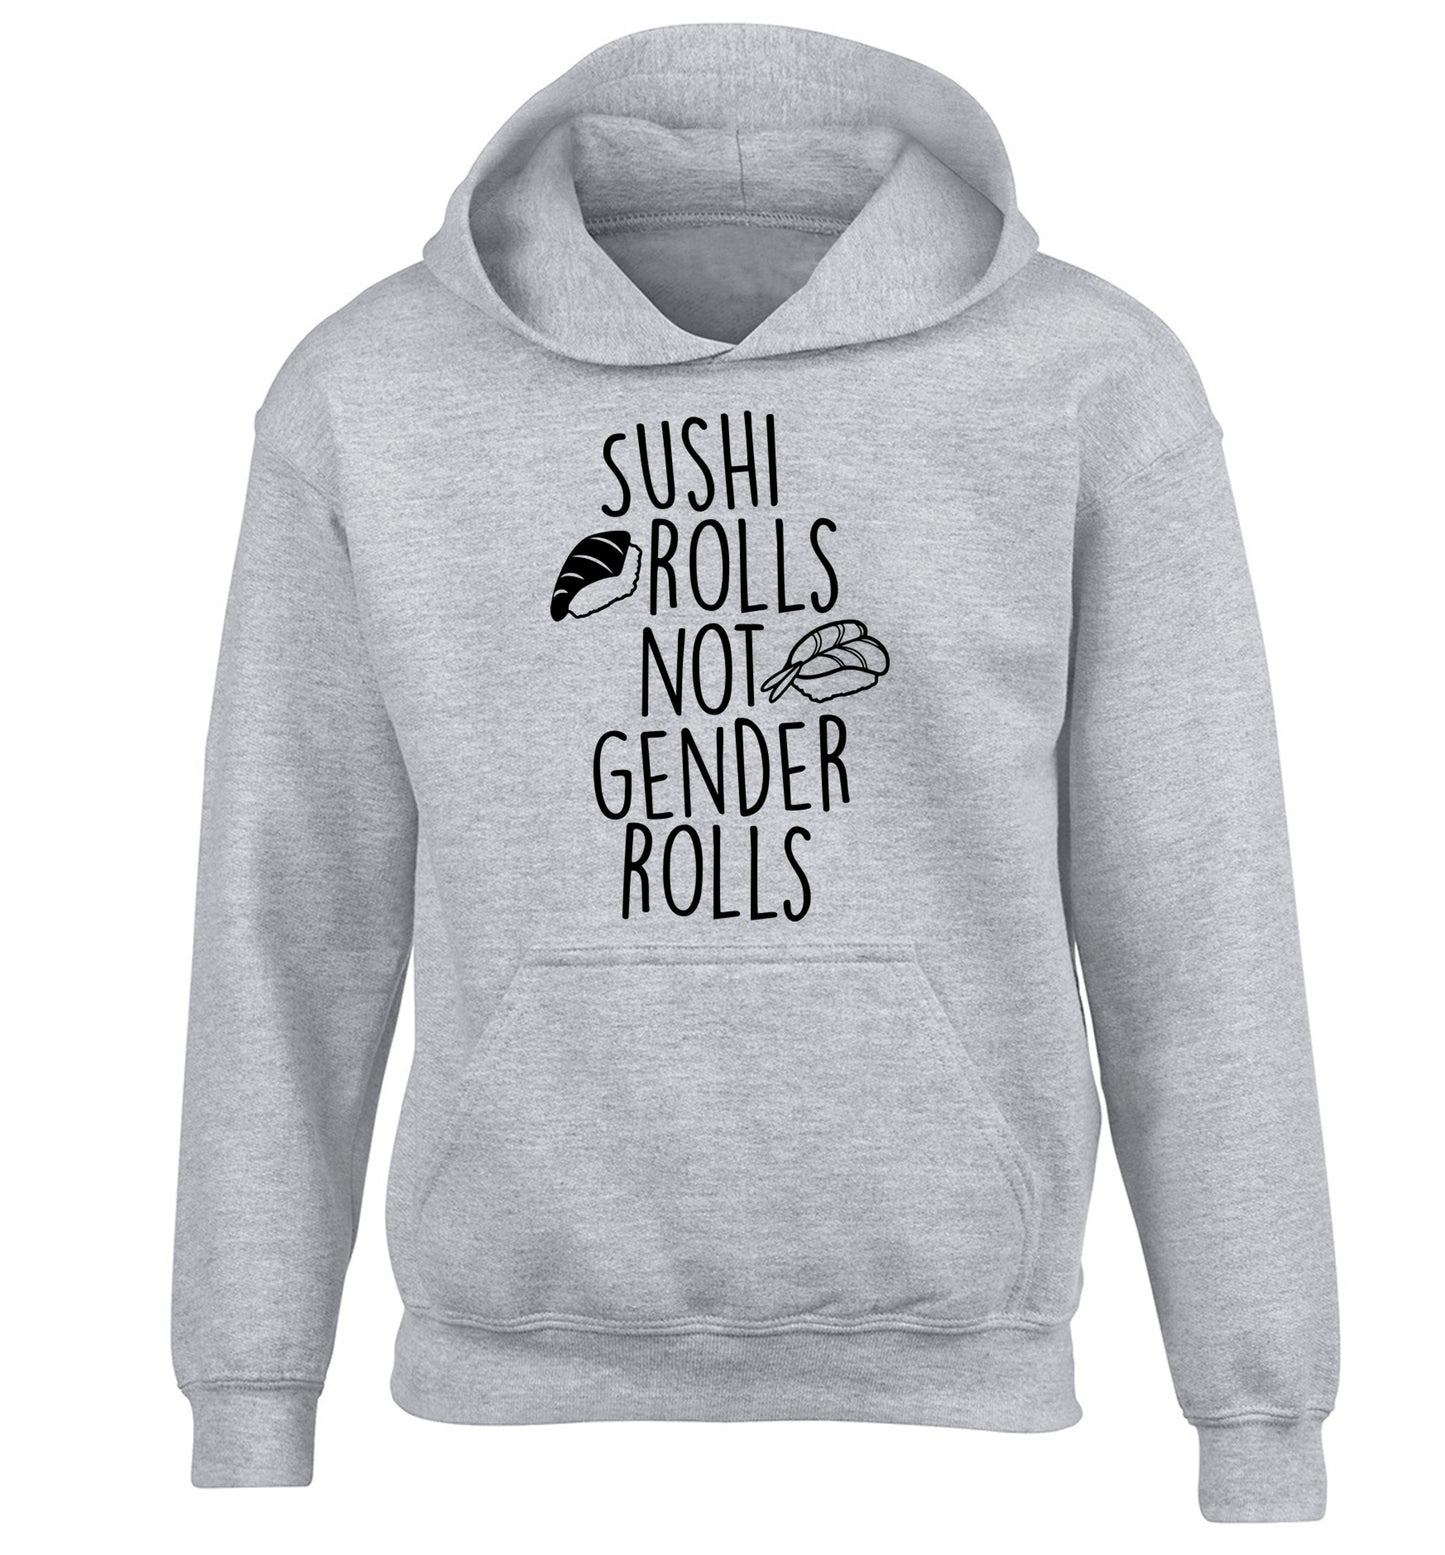 Sushi rolls not gender rolls children's grey hoodie 12-14 Years